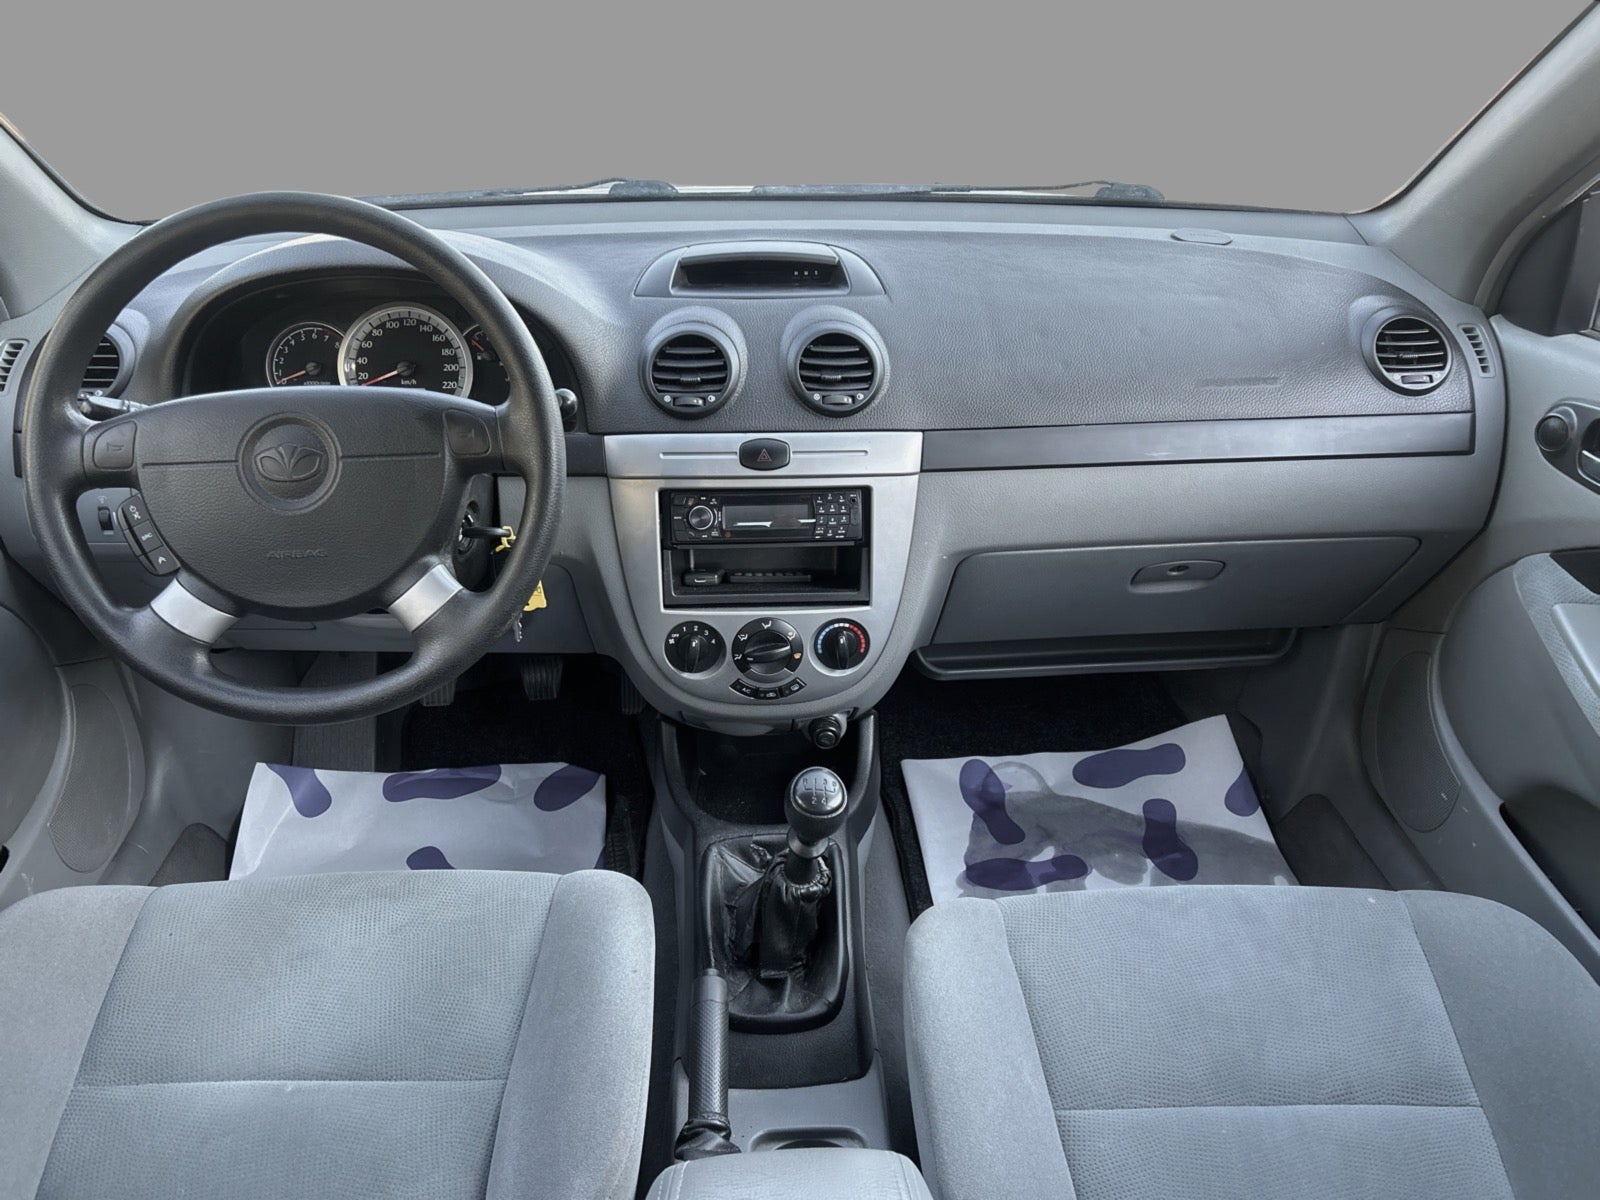 Daewoo Lacetti 1,4 SX Benzin modelår 2005 km 125000